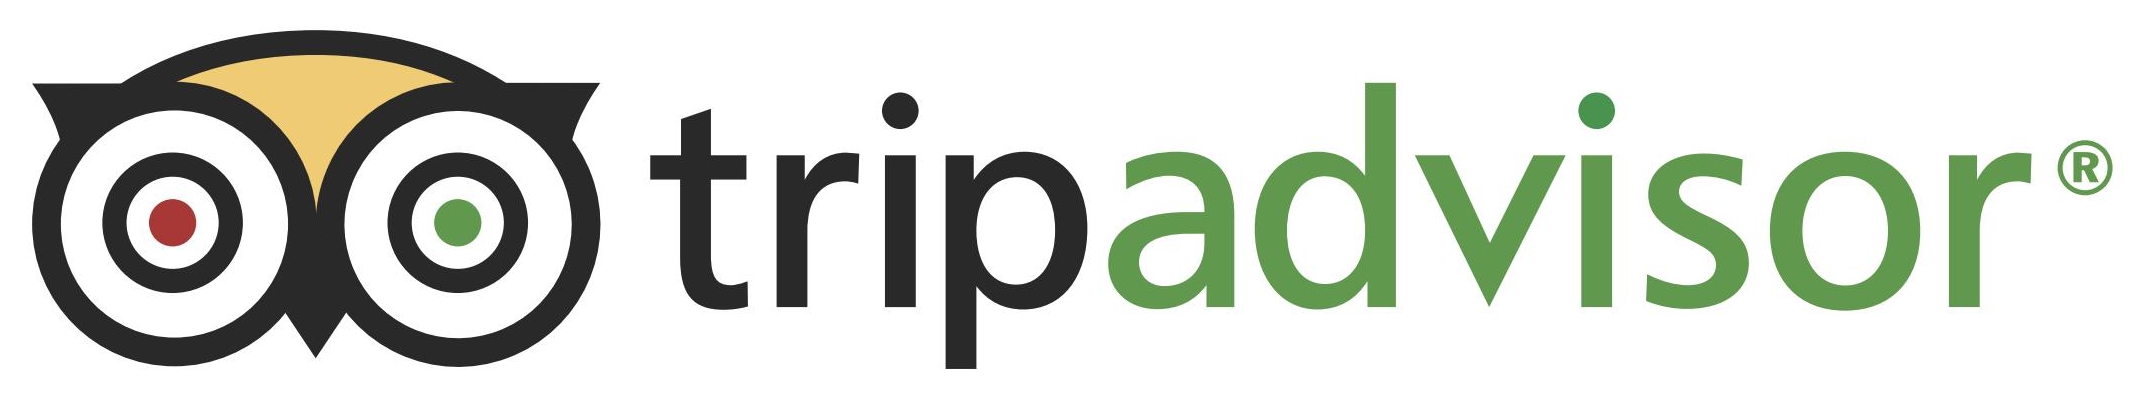 Tripadvisor Logo - Tripadvisor Vector, Transparent background PNG HD thumbnail